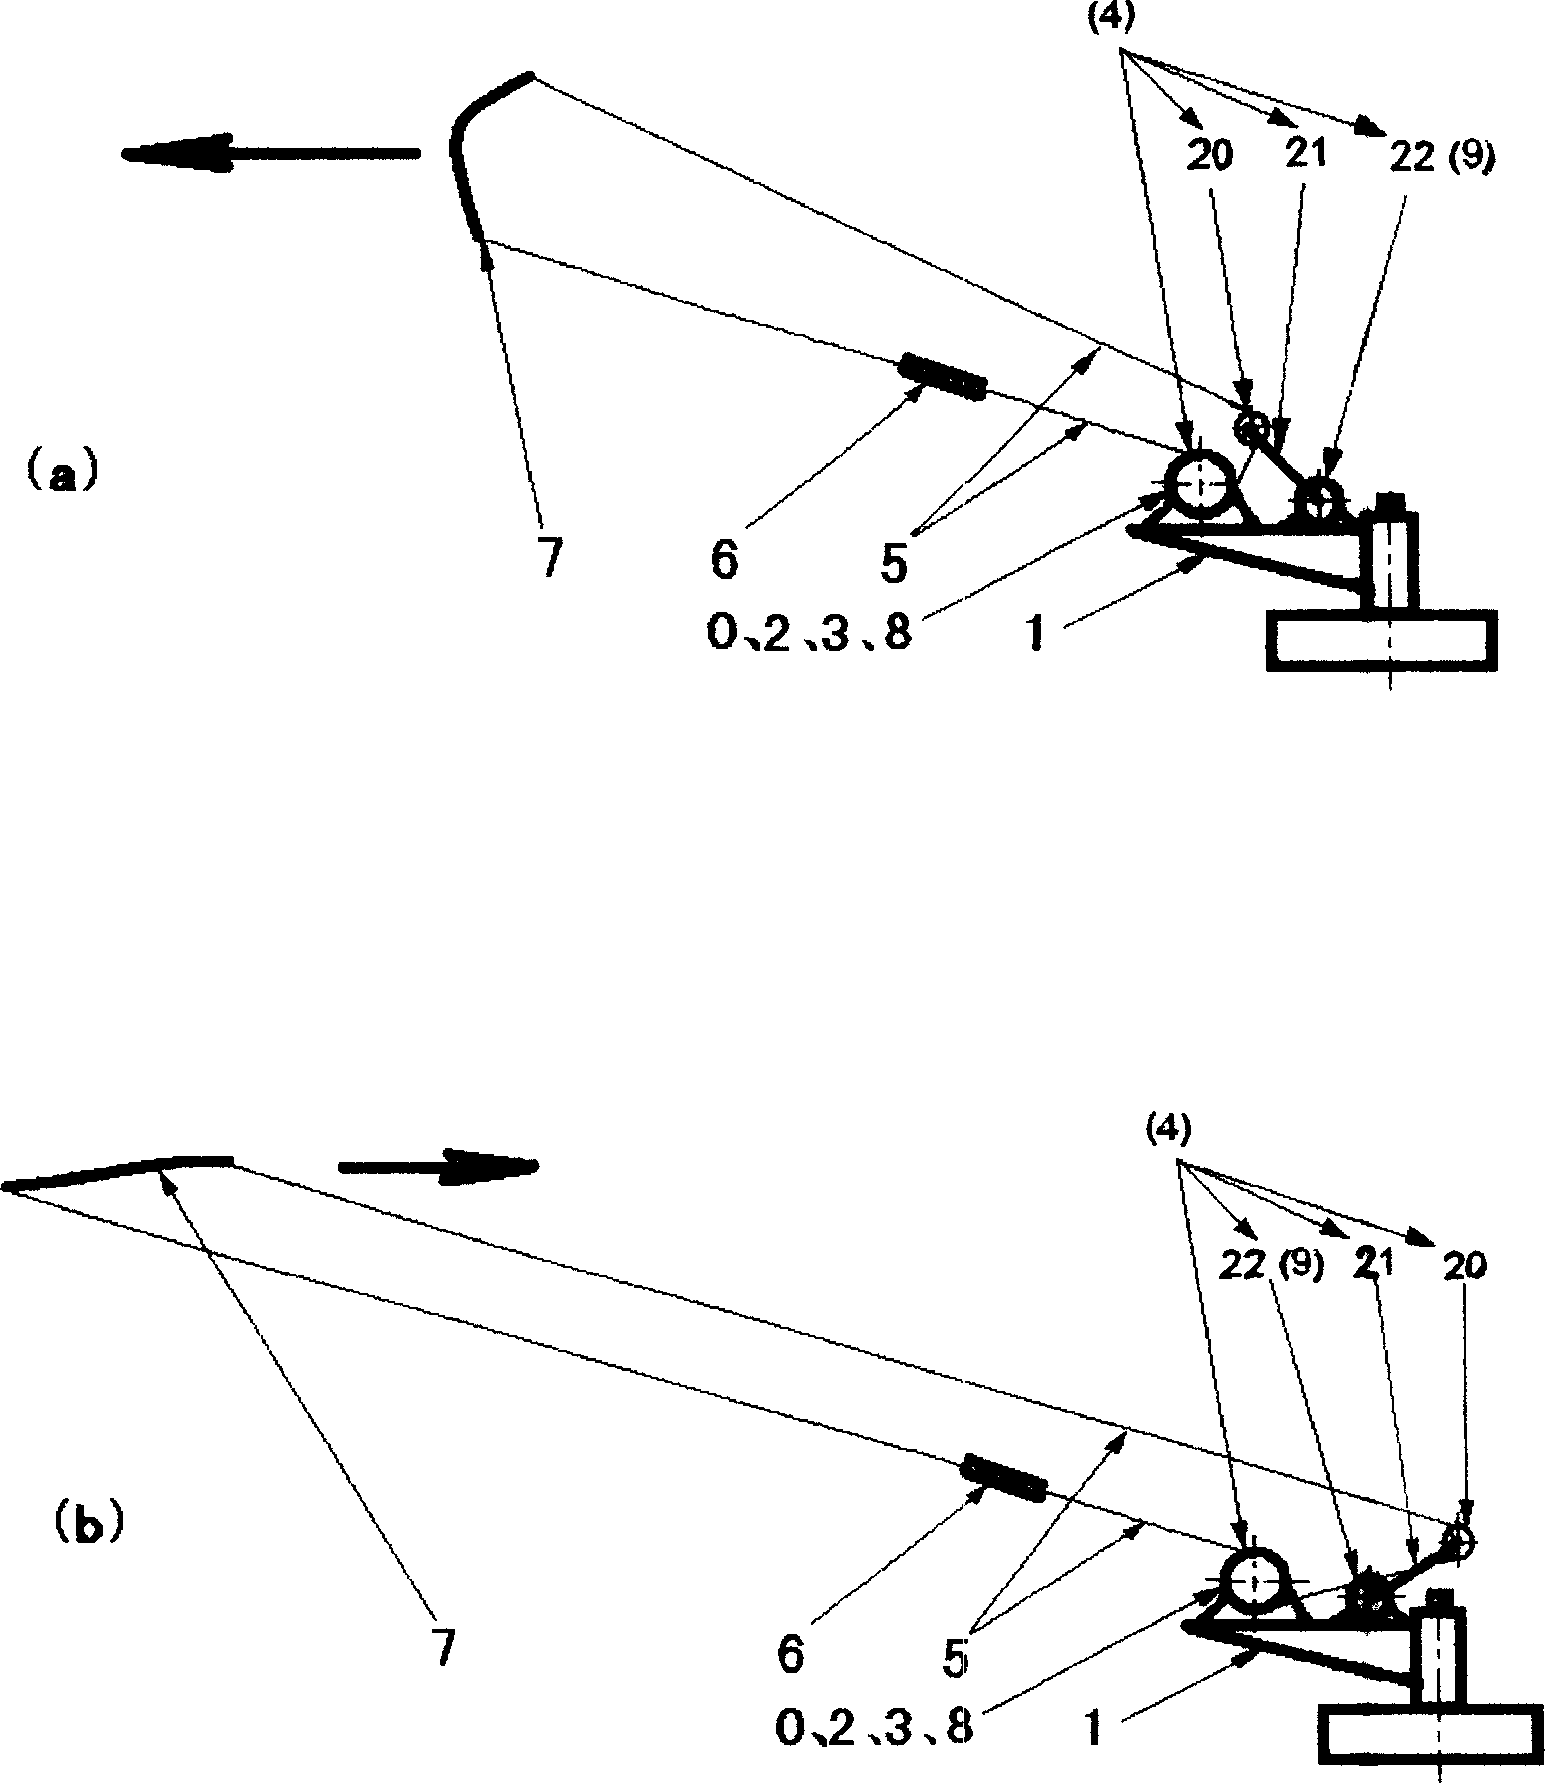 Kite power generation method